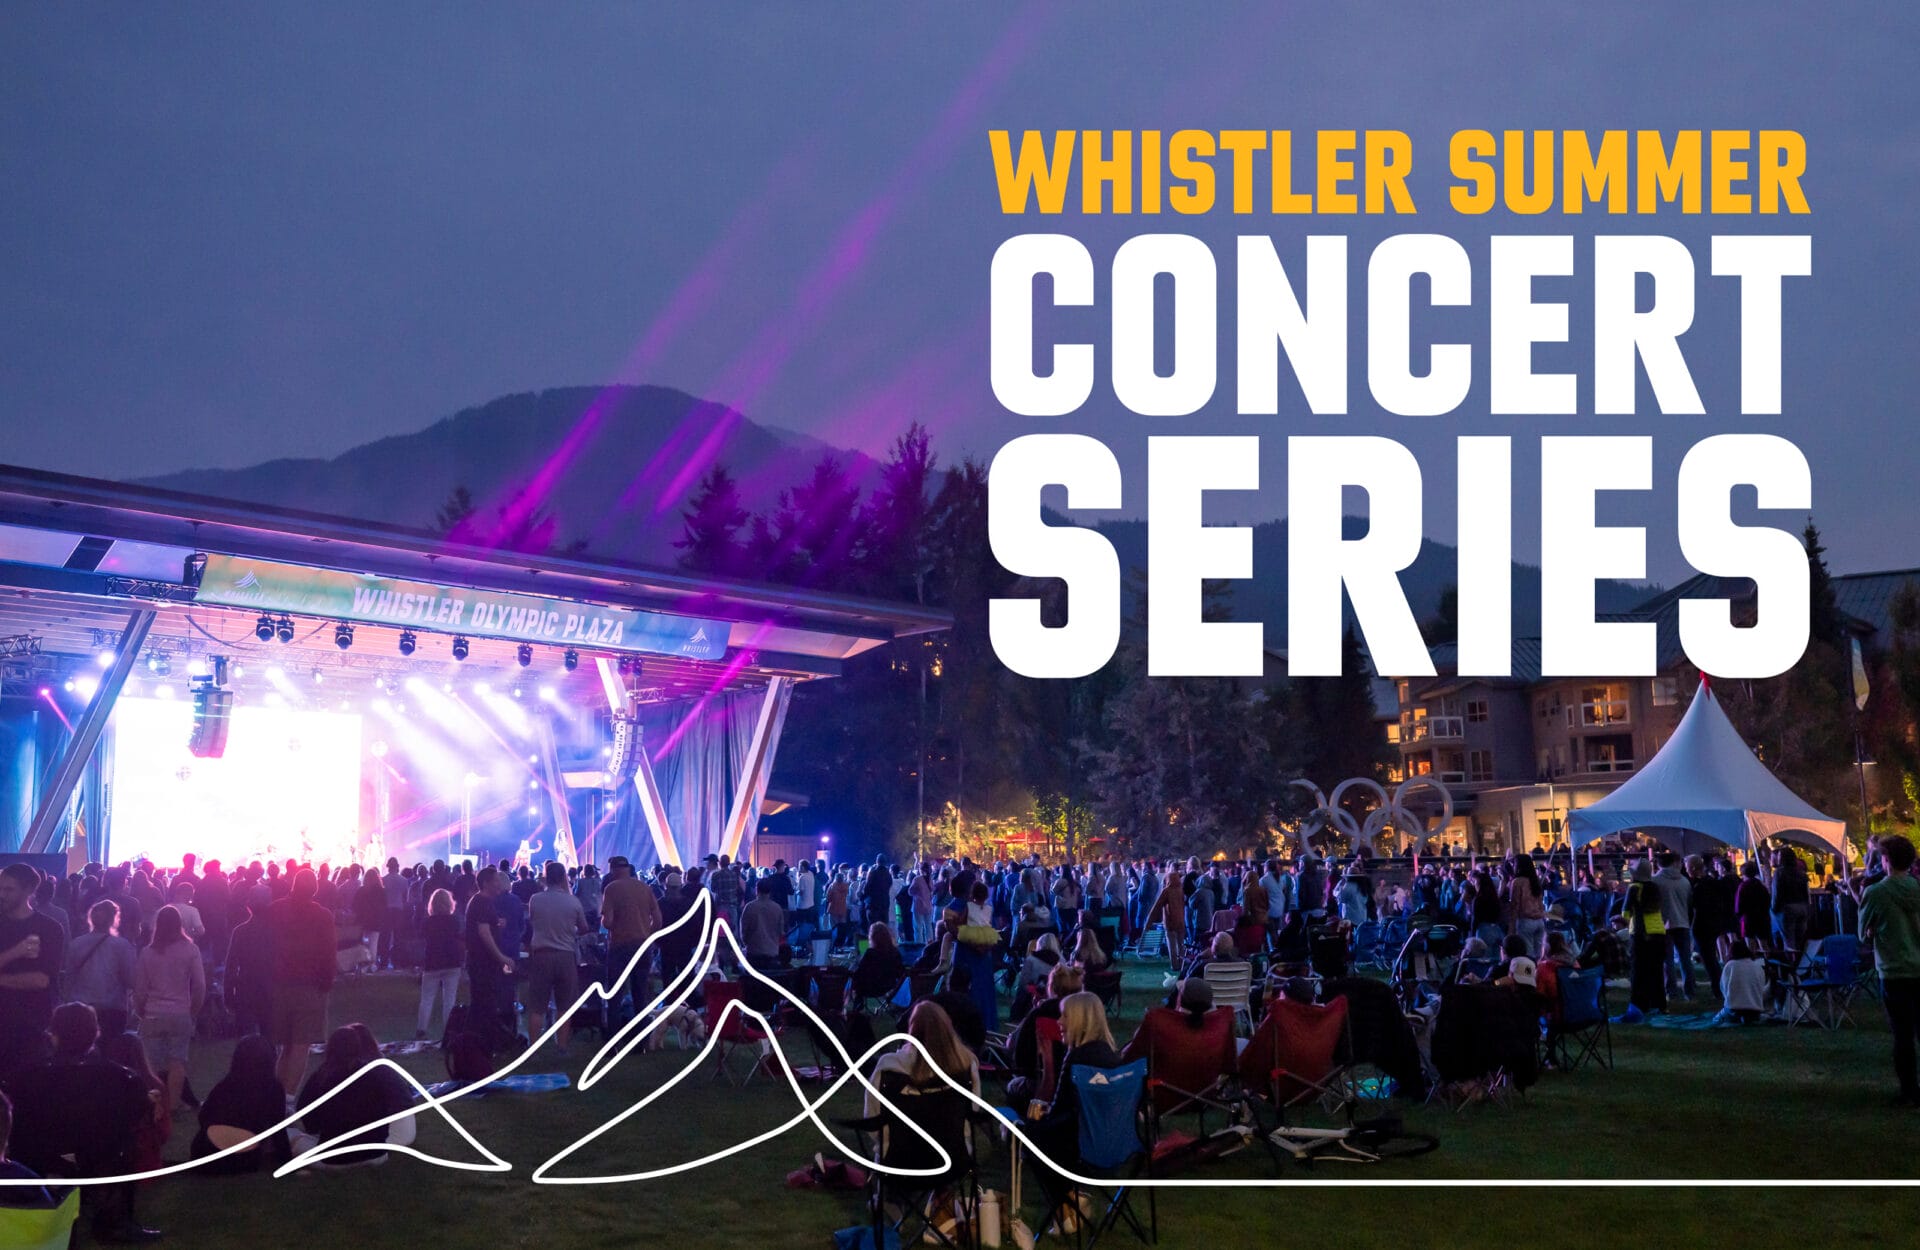 Whistler Summer Concert Series dates